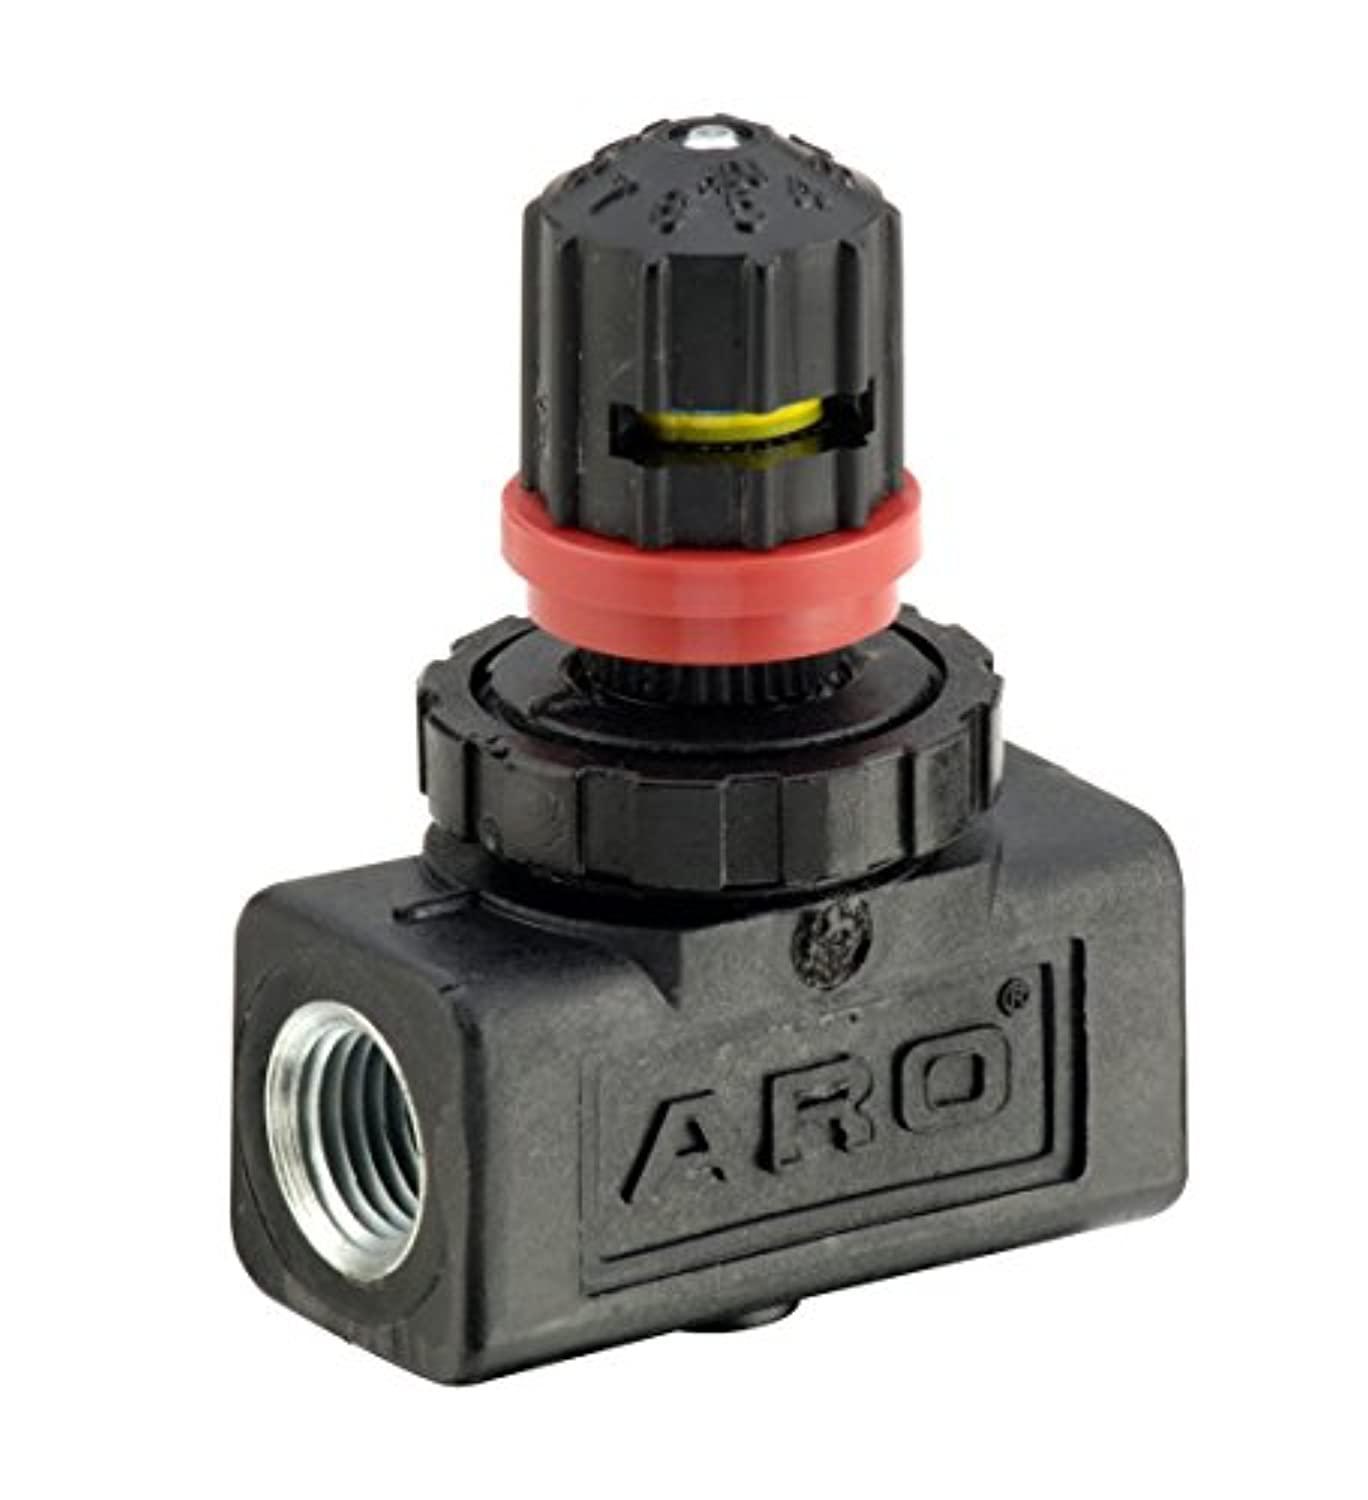 Ingersoll Rand aro 104104-f02 inline flow control valve, 1/4" npt